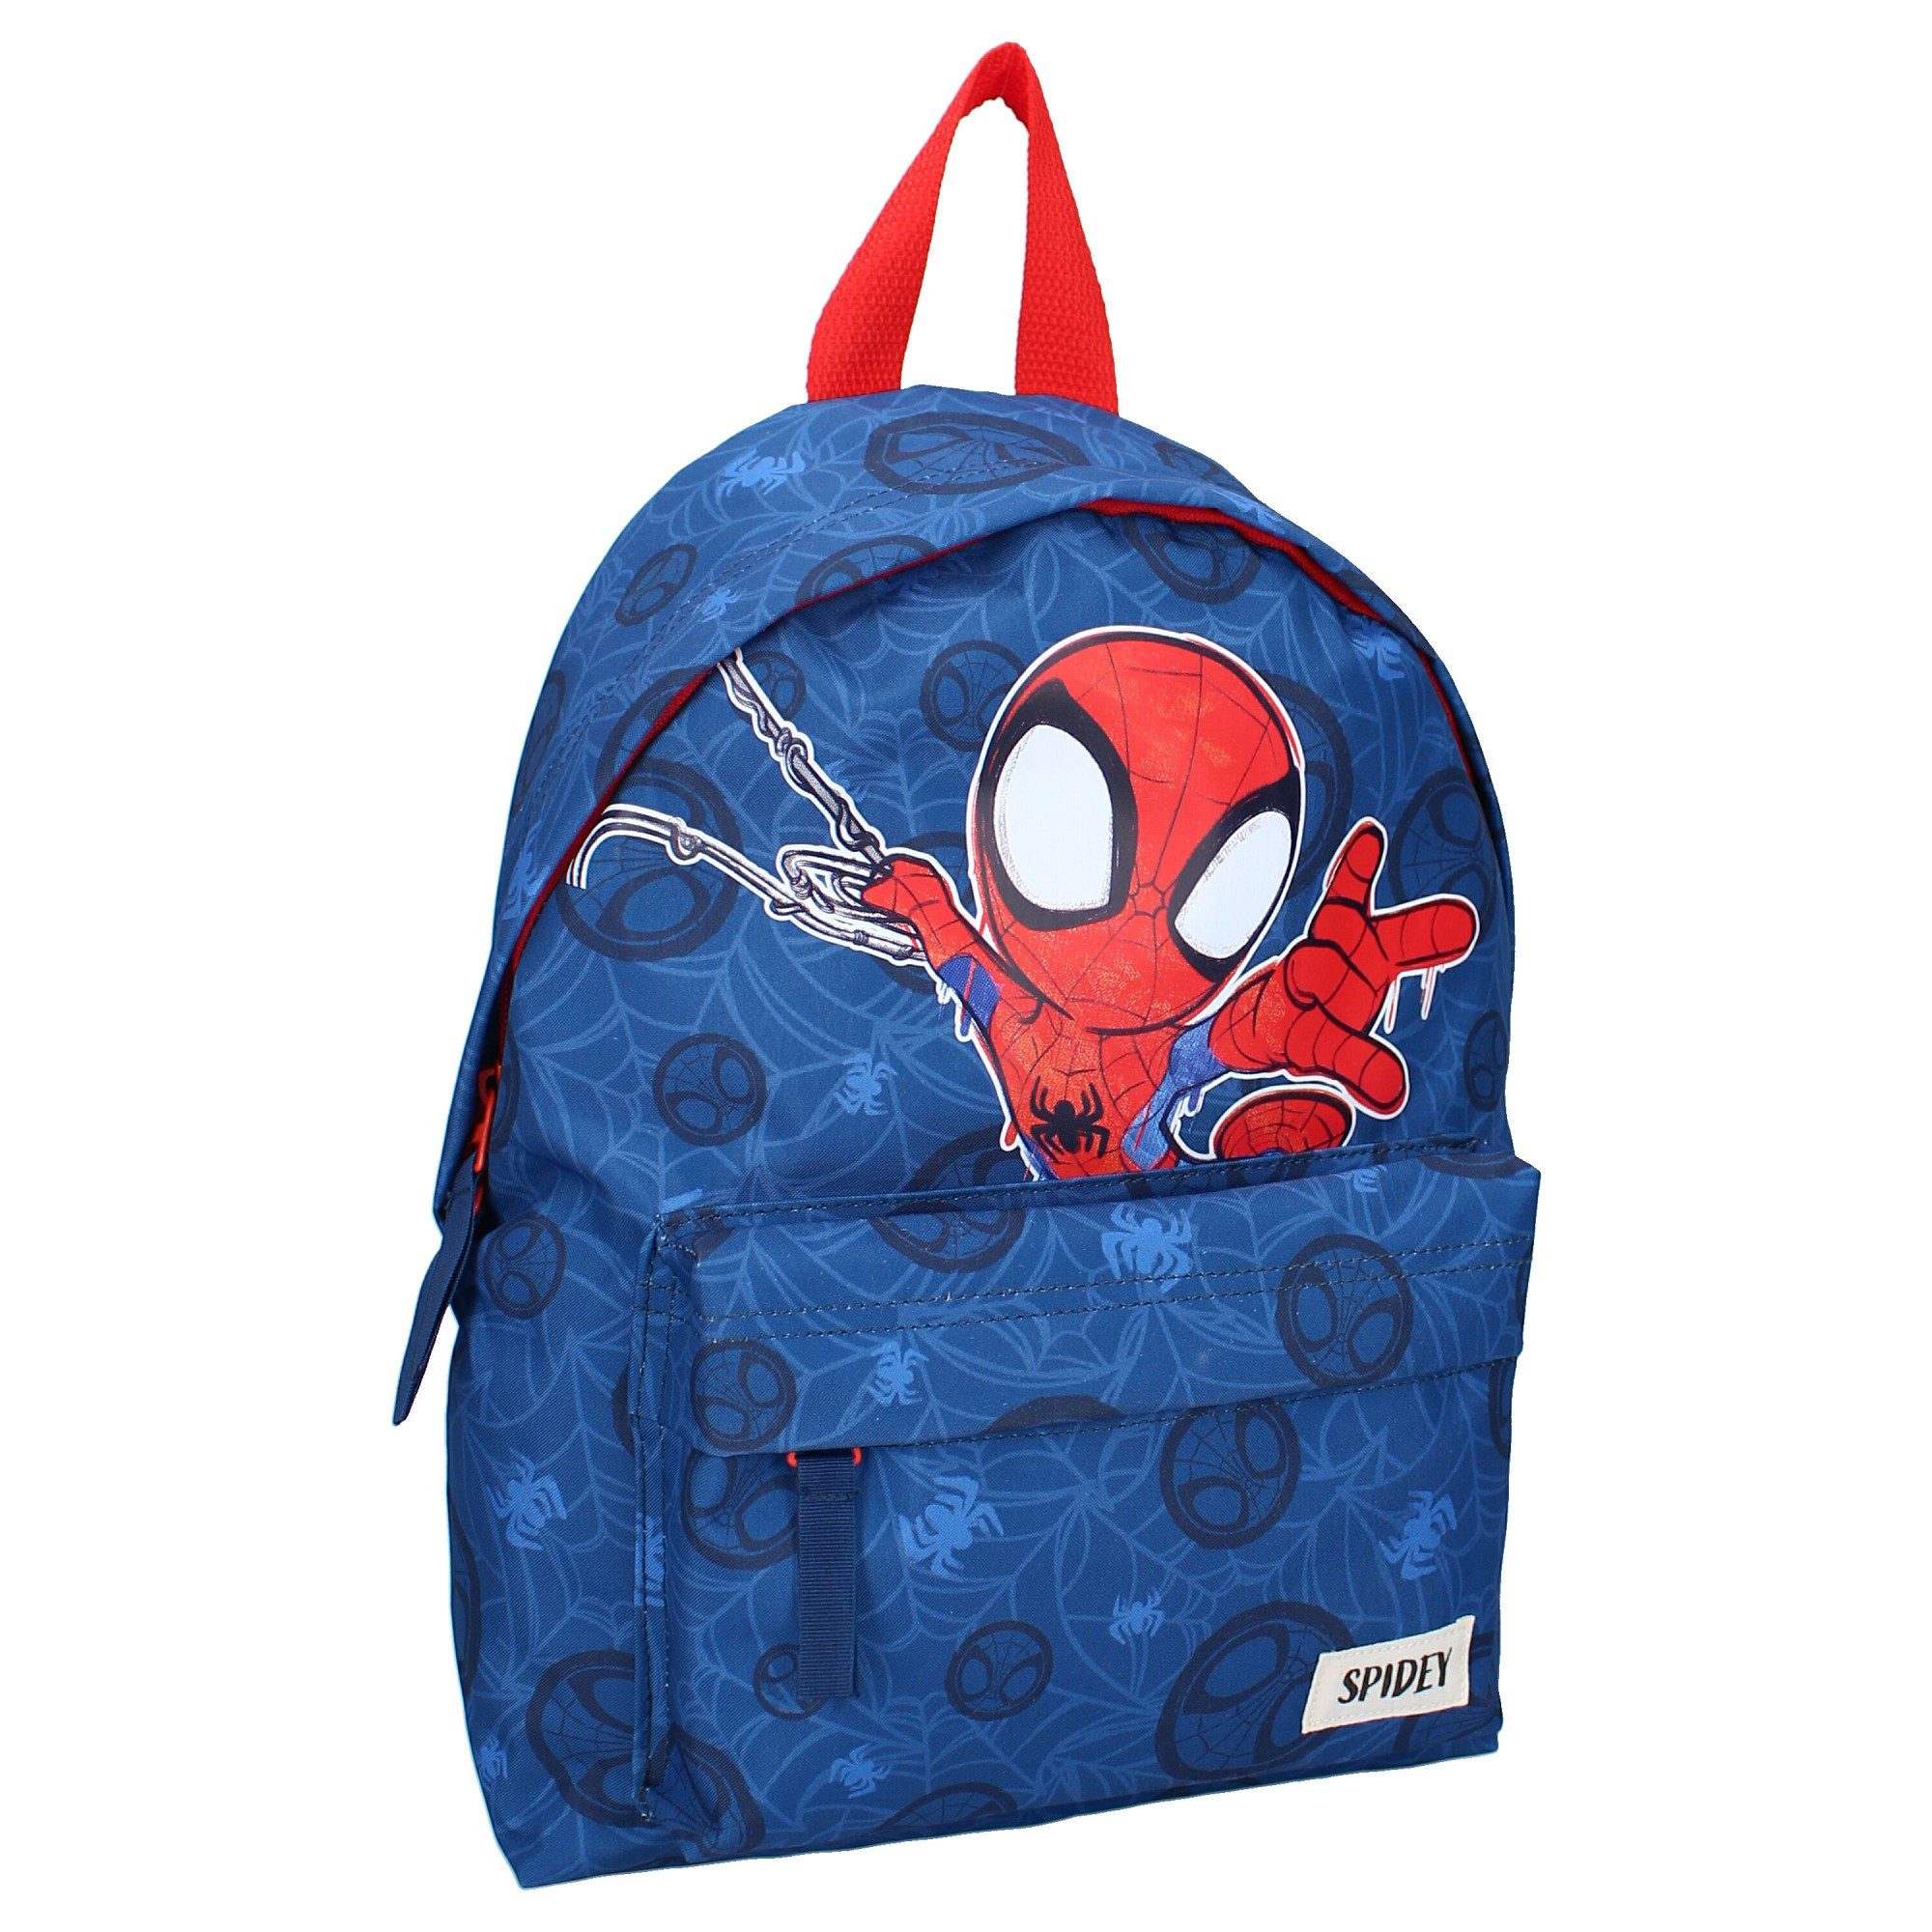 MARVEL Minirucksack Marvel Spiderman Spidey Kinder Kita Rucksack Gr. 31 x 22 x 9 cm